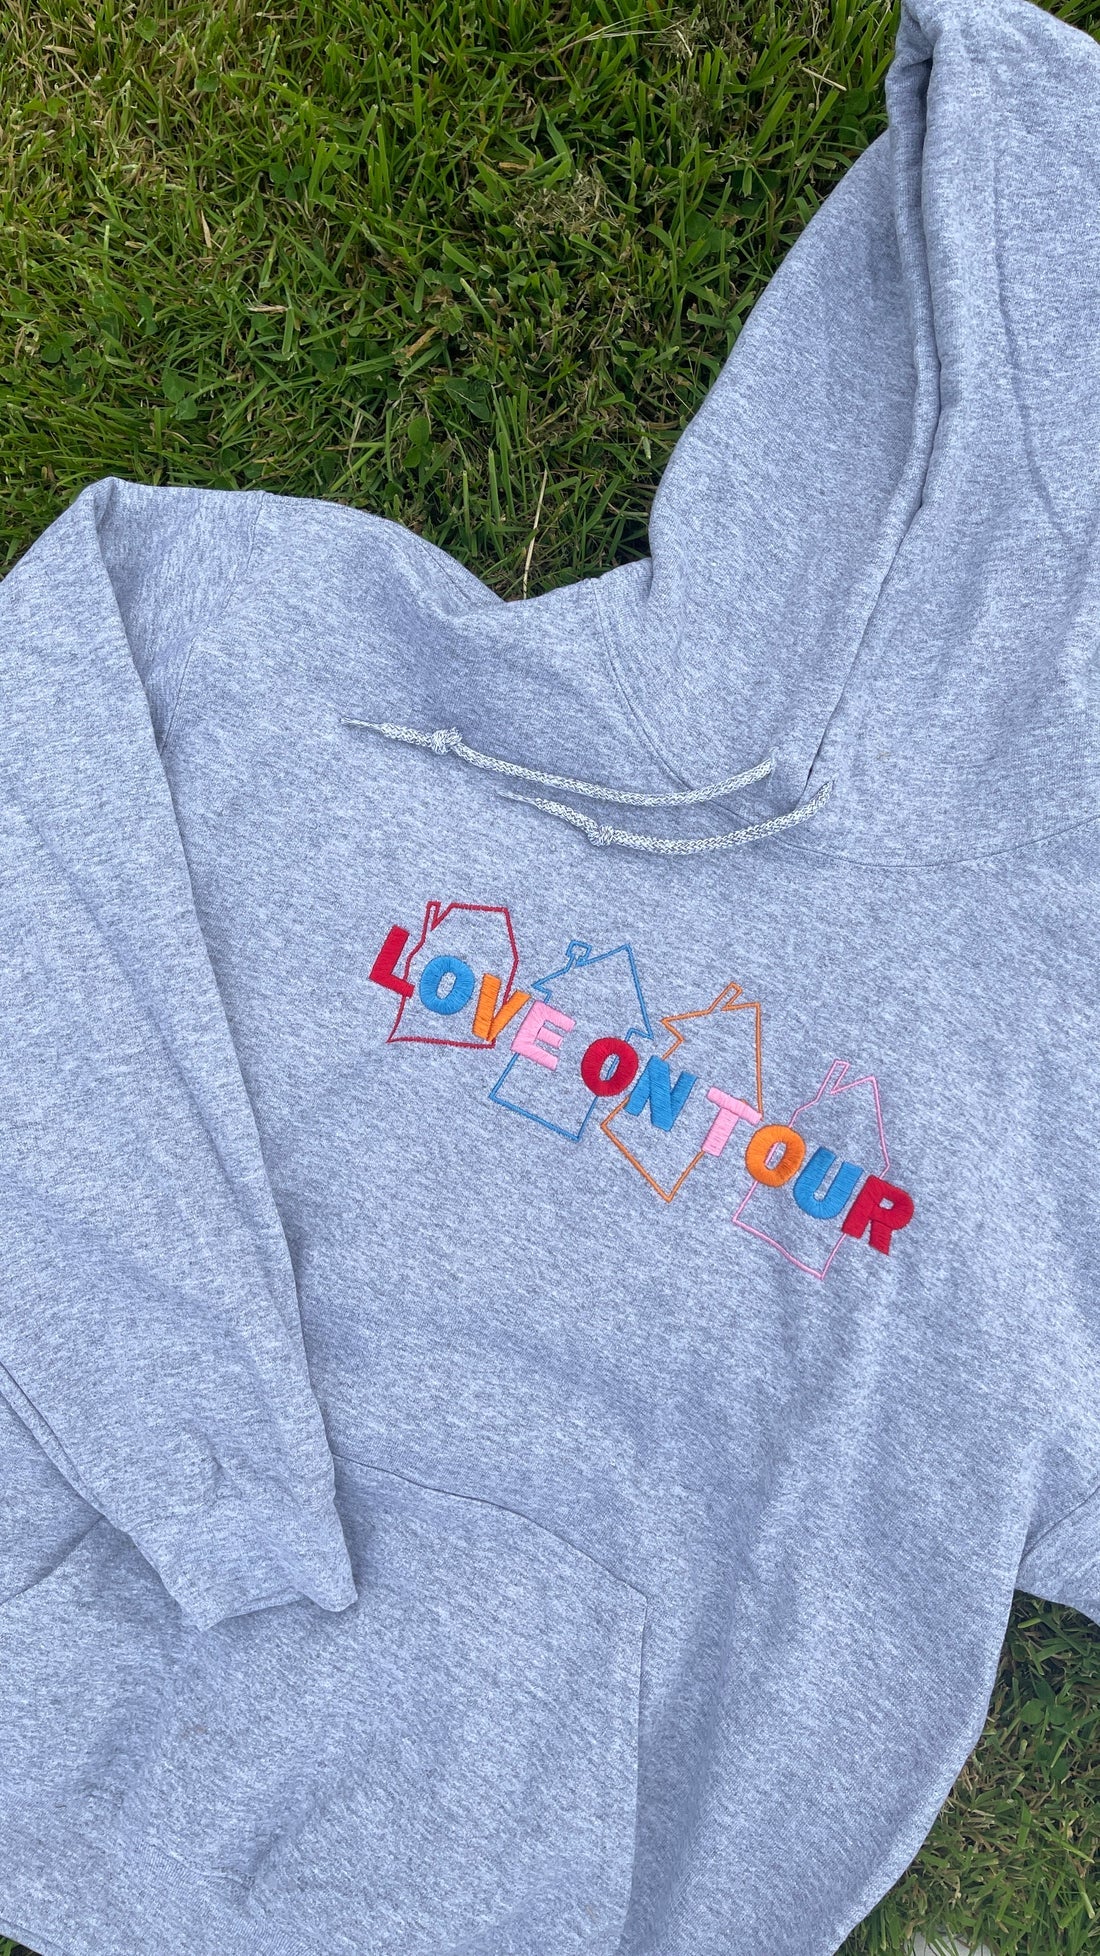 Love on Tour Embroidered Sweatshirt/Hoodie